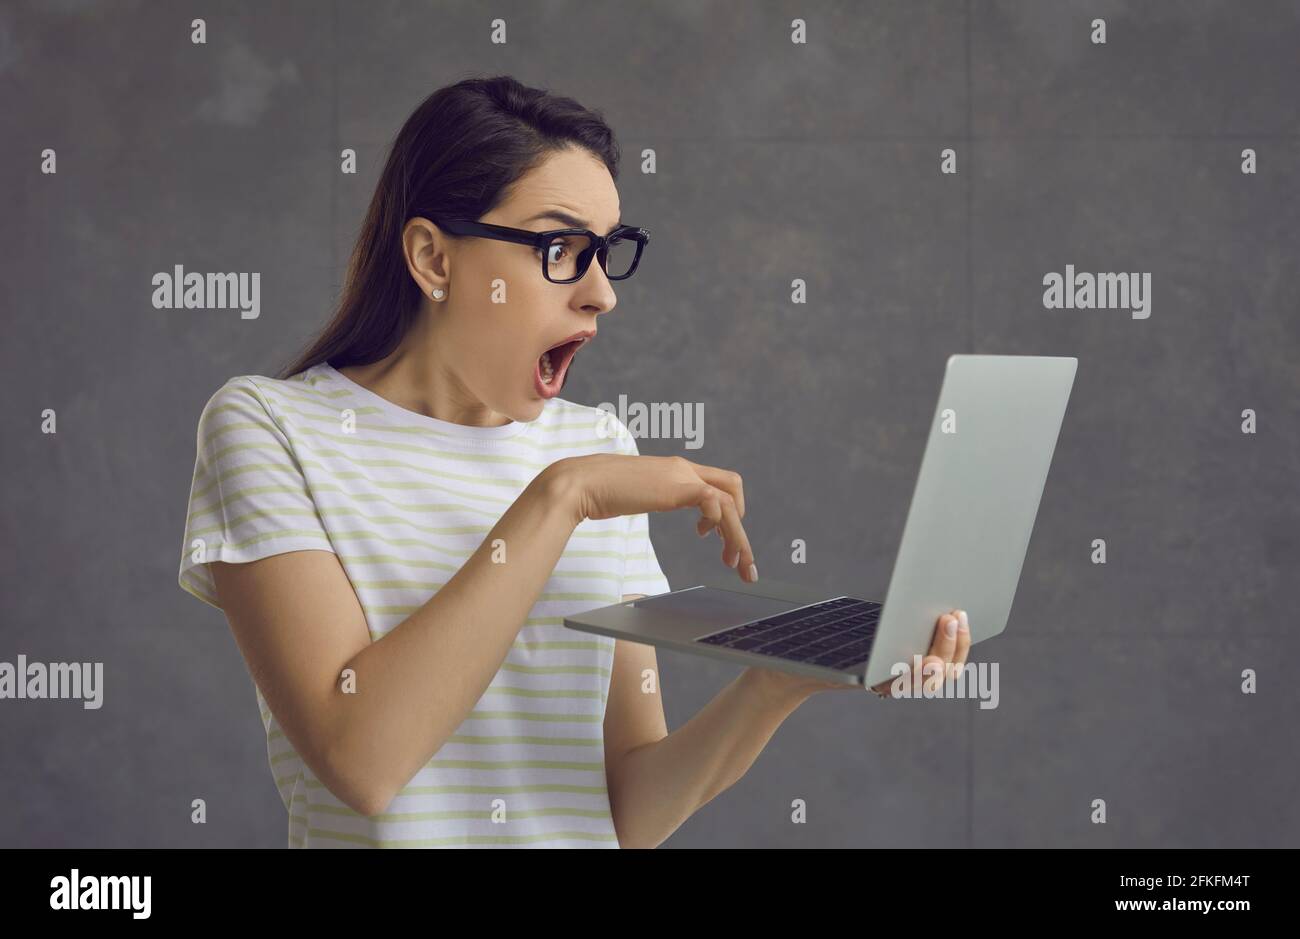 Shocked emotional woman in eyeglasses looking at laptop screen studio shot Stock Photo